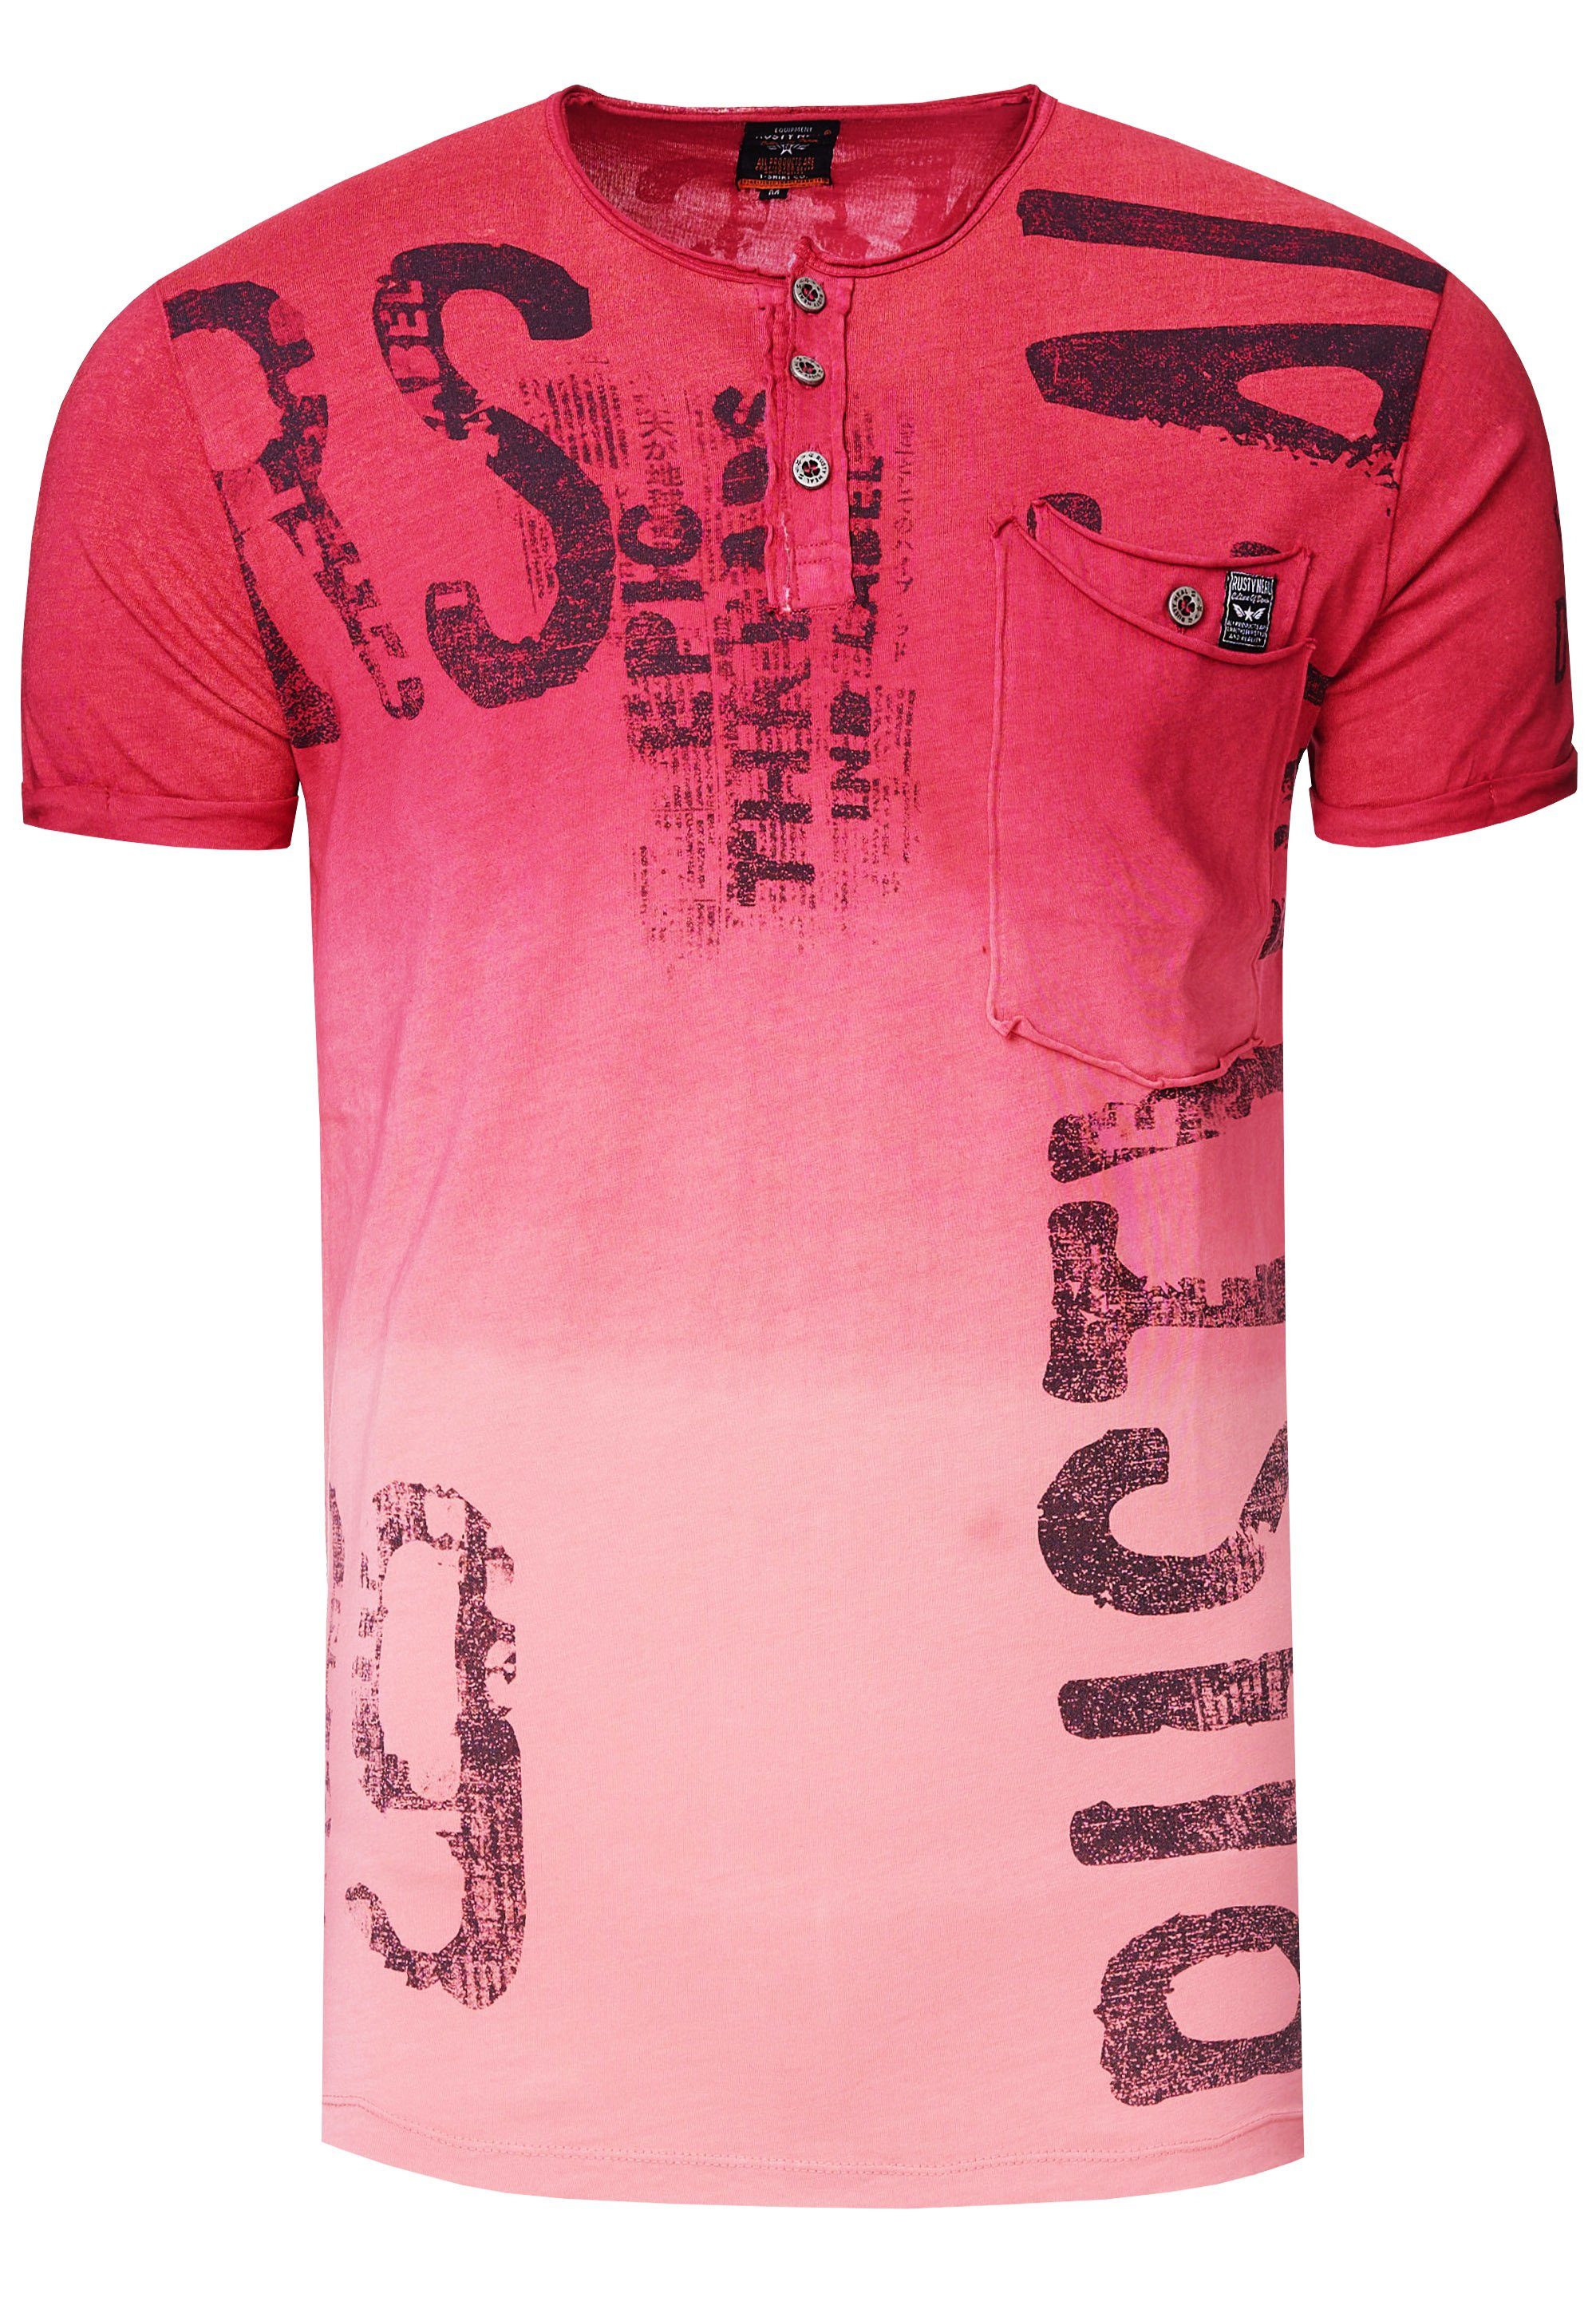 Rusty Neal T-Shirt Rusty Neal trendigem Markenprint mit Shirt bordeaux